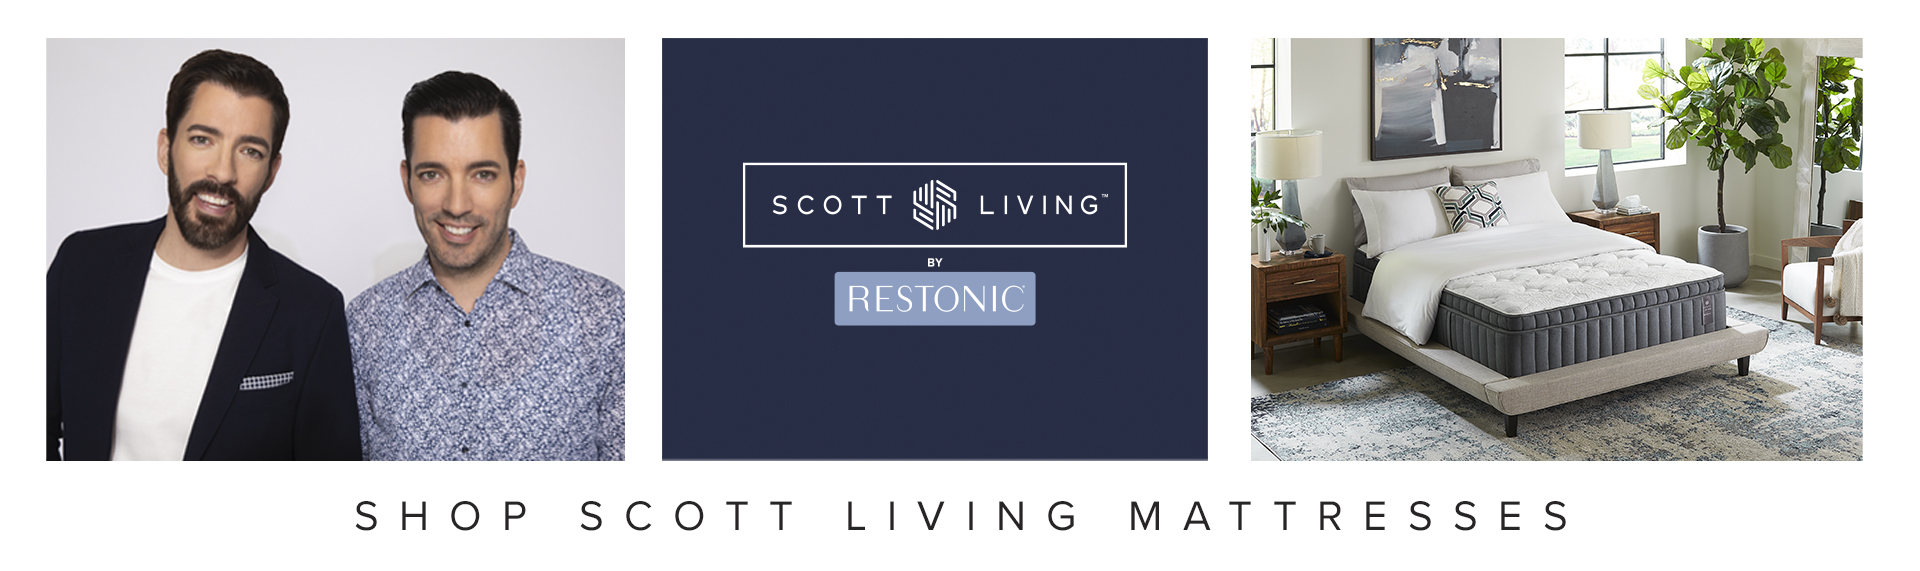 Scott Living Mattresses